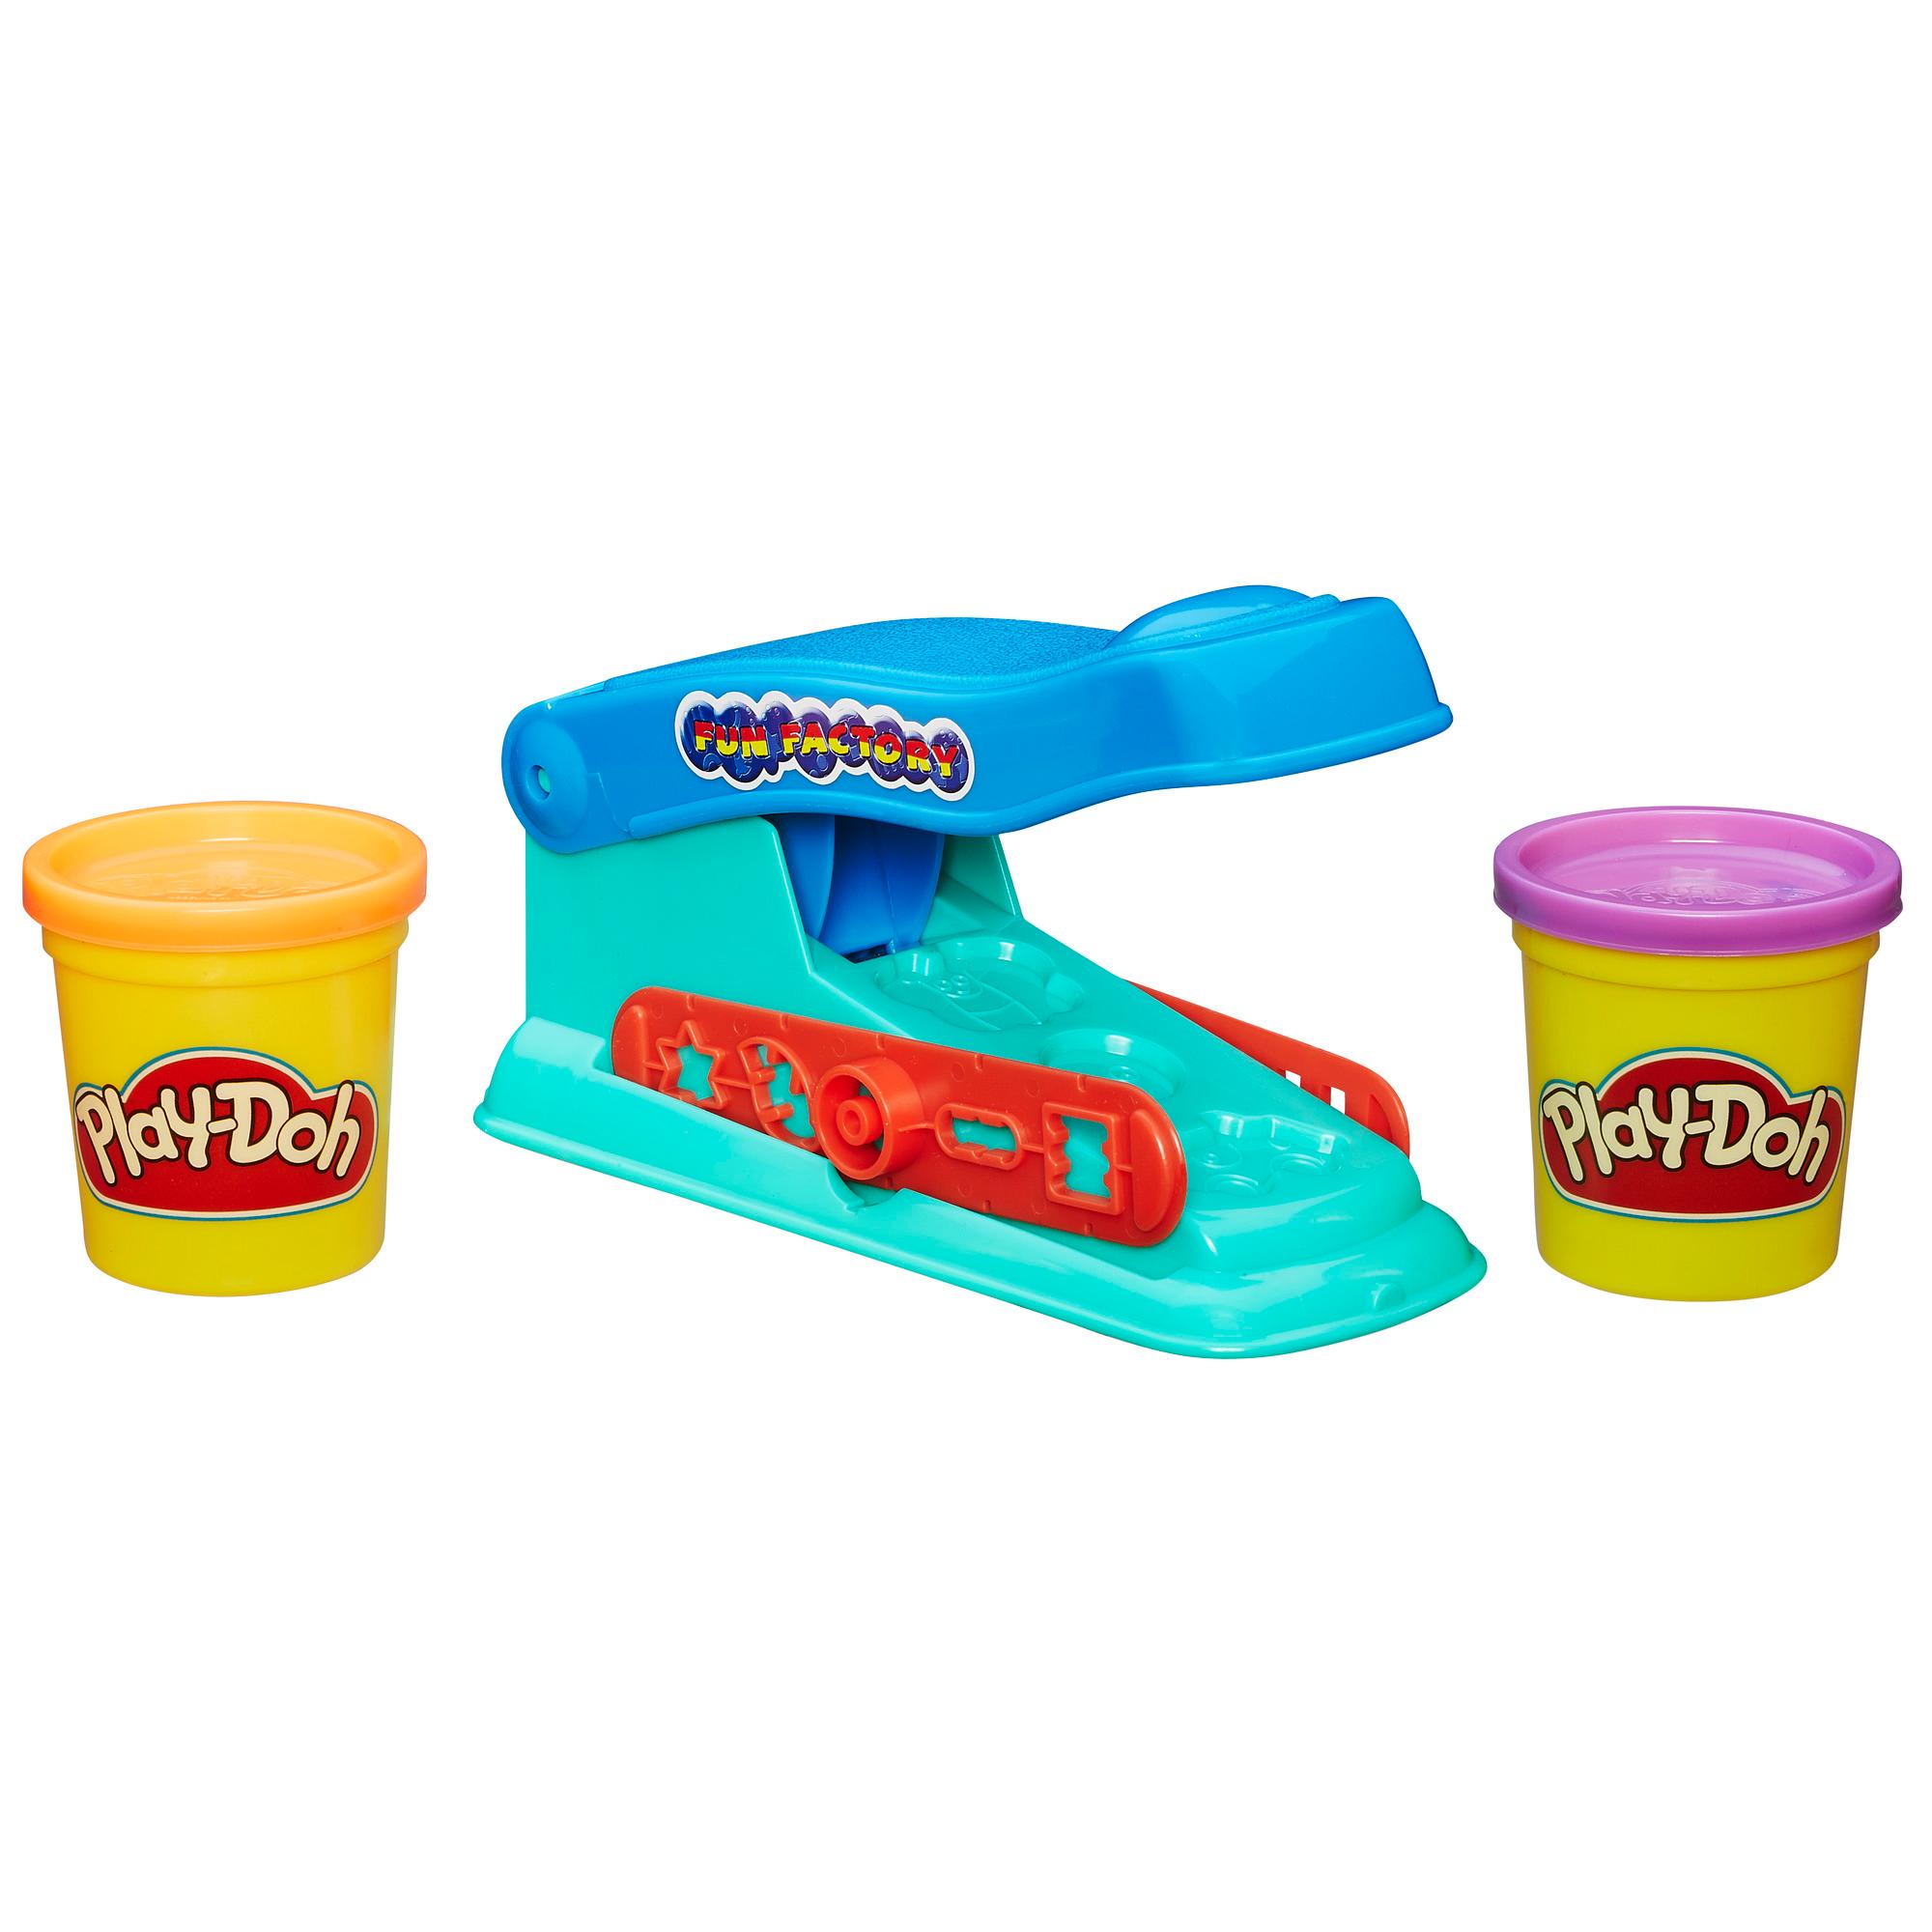 Play-Doh Mini Fun Factory Assortment